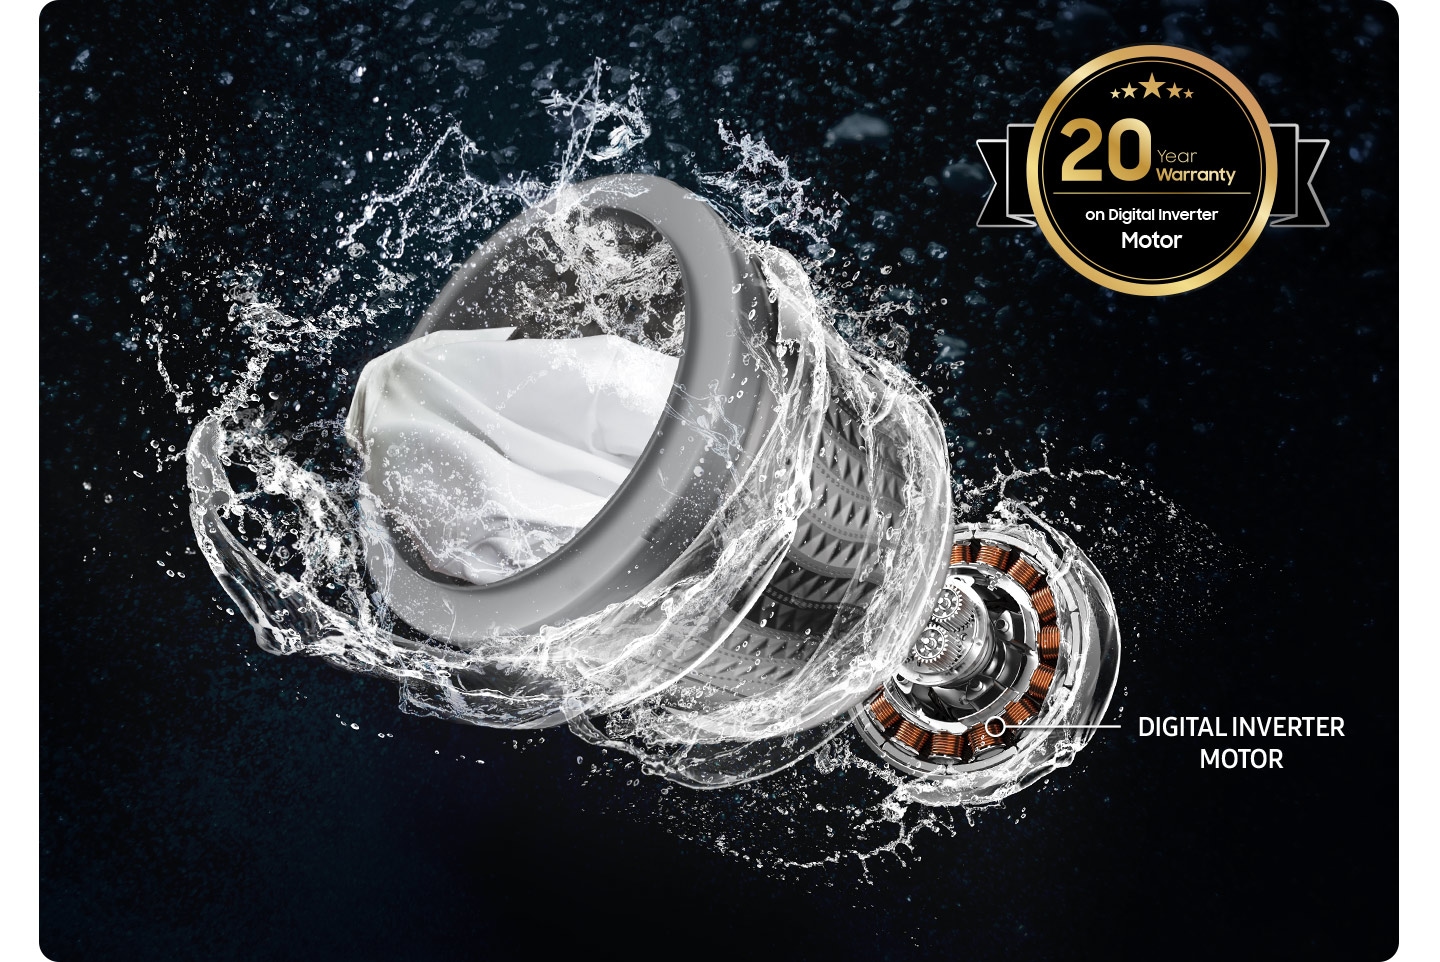 Digital Inverter Motor, drum and water stream spins fast. WA5000C's warranty is 20 years.